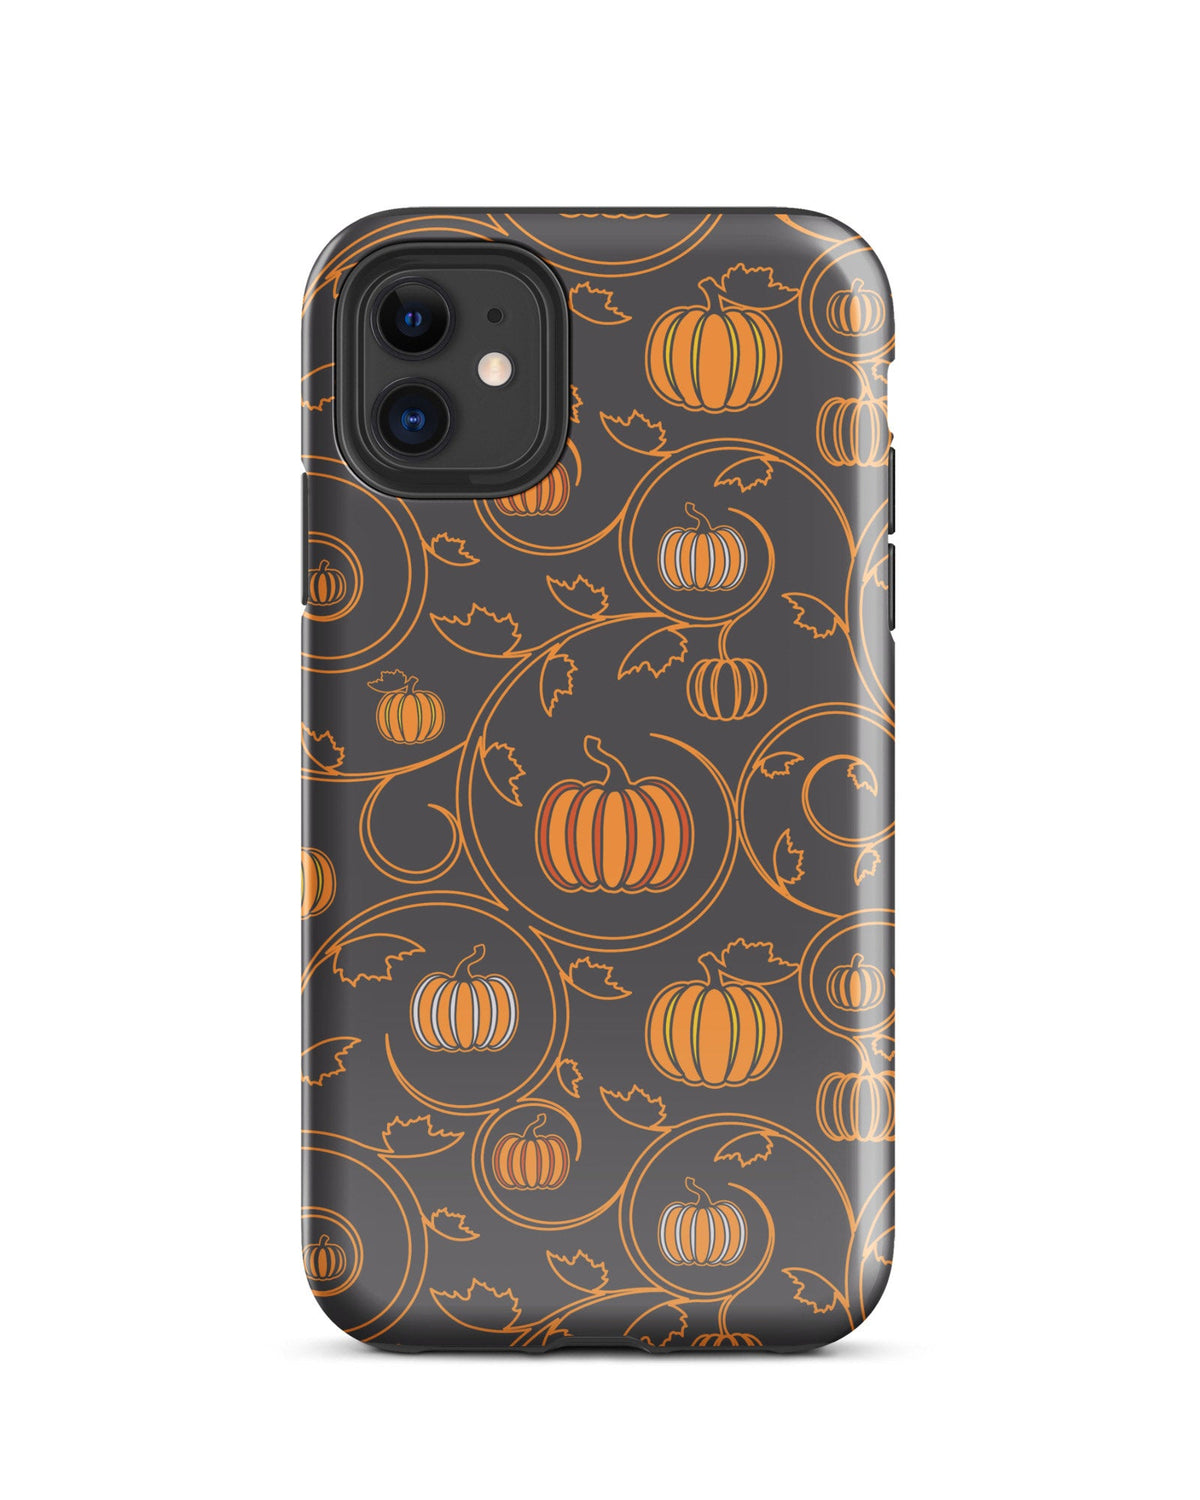 Pumpkin Patch Cabin Case for iPhone®